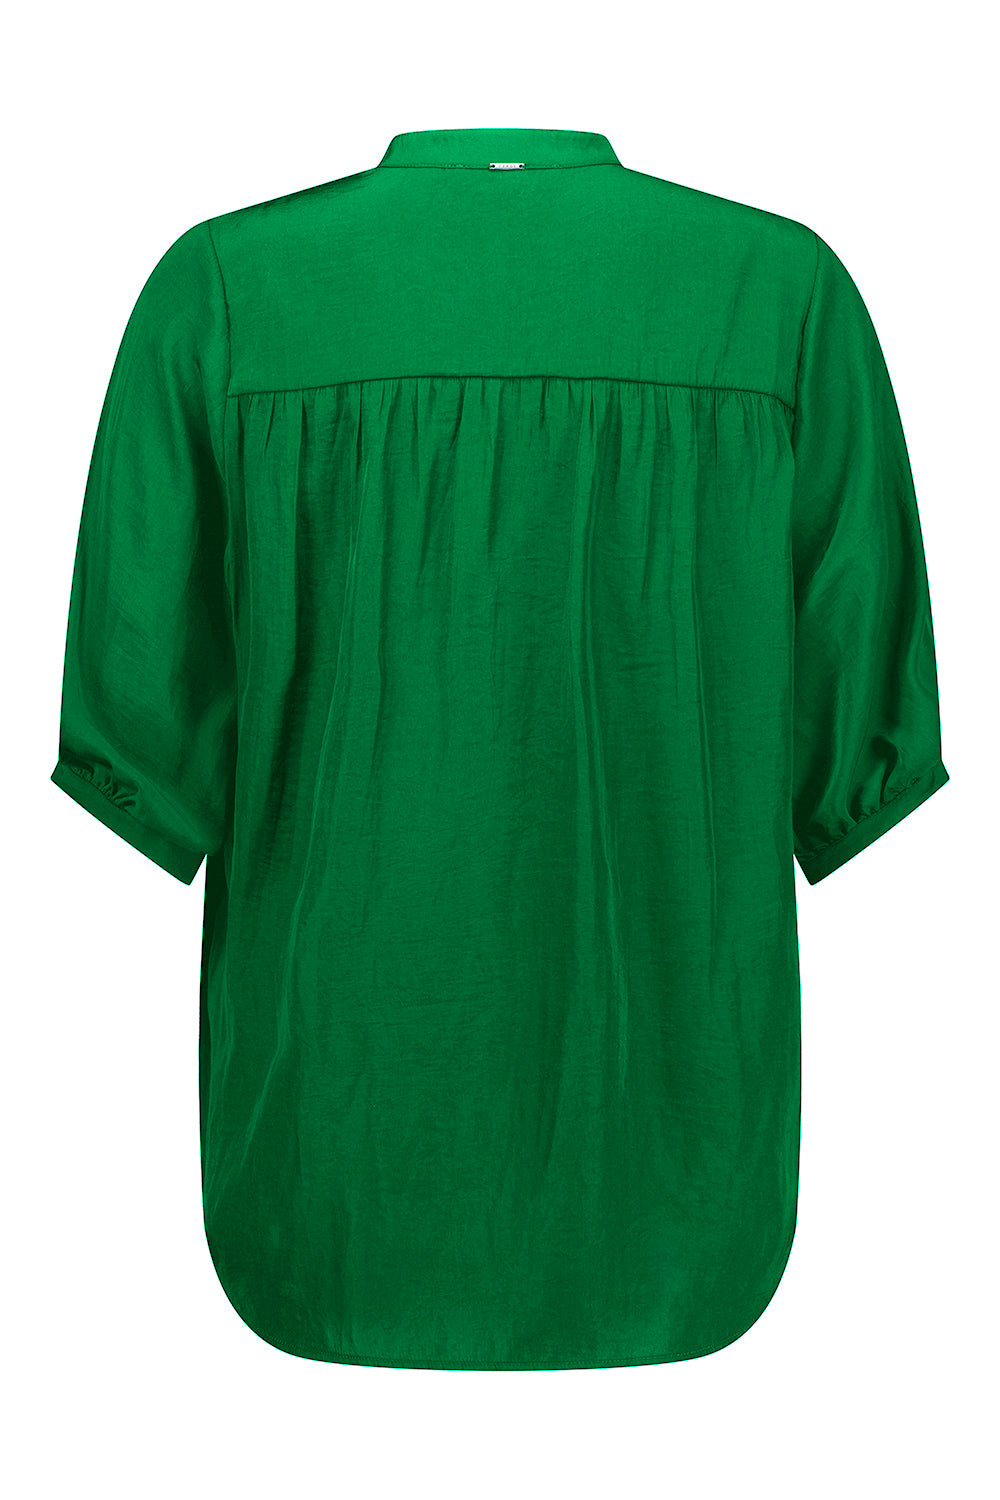 Glide by Verge - Rotate Shirt - Emerald - VERGE